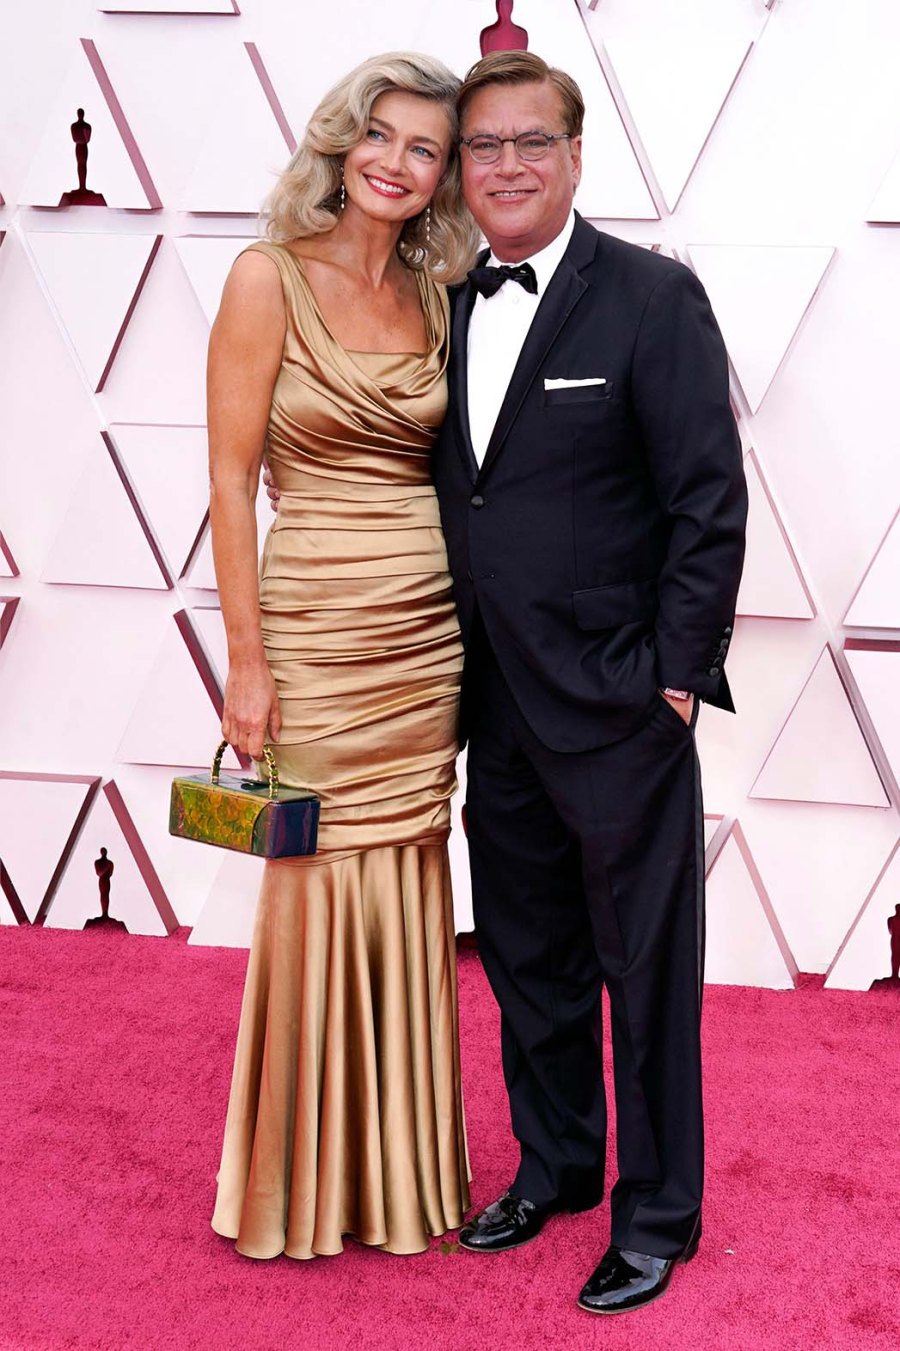 Oscars 2021 Paulina Porizkova Aaron Sorkin Make Red Carpet Debut 2021 Academy Awards